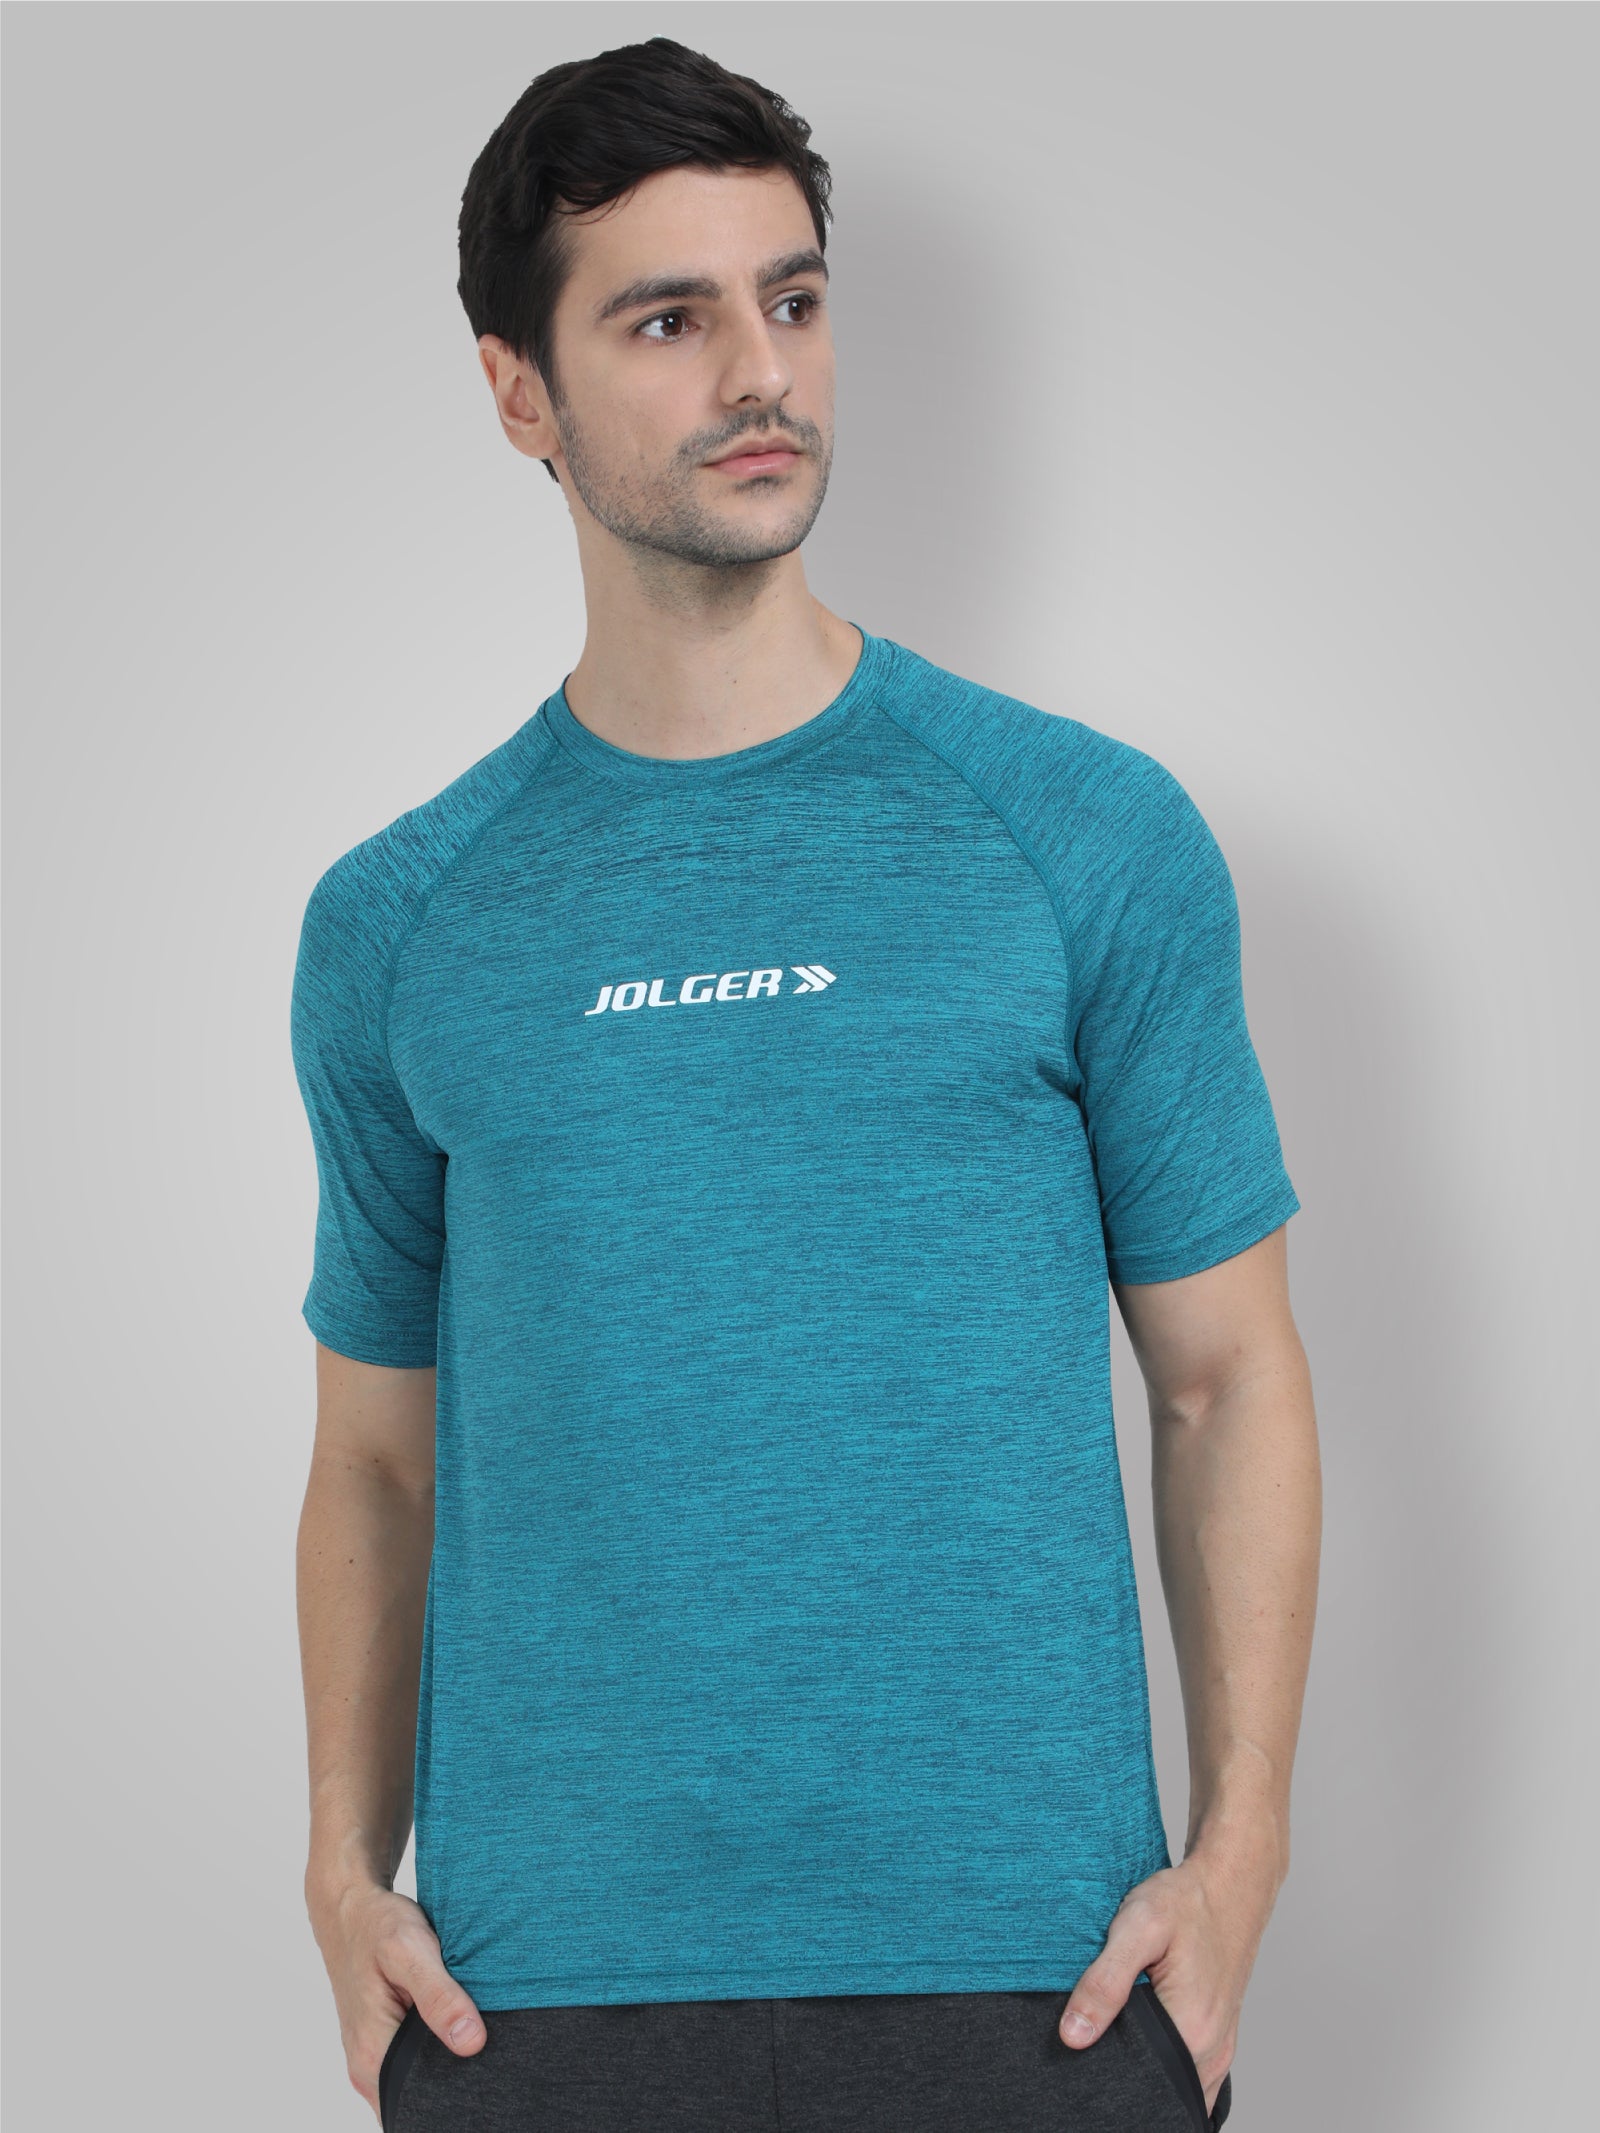 Men's Gym Tshirts - Tshirts For Men Online - Green Color